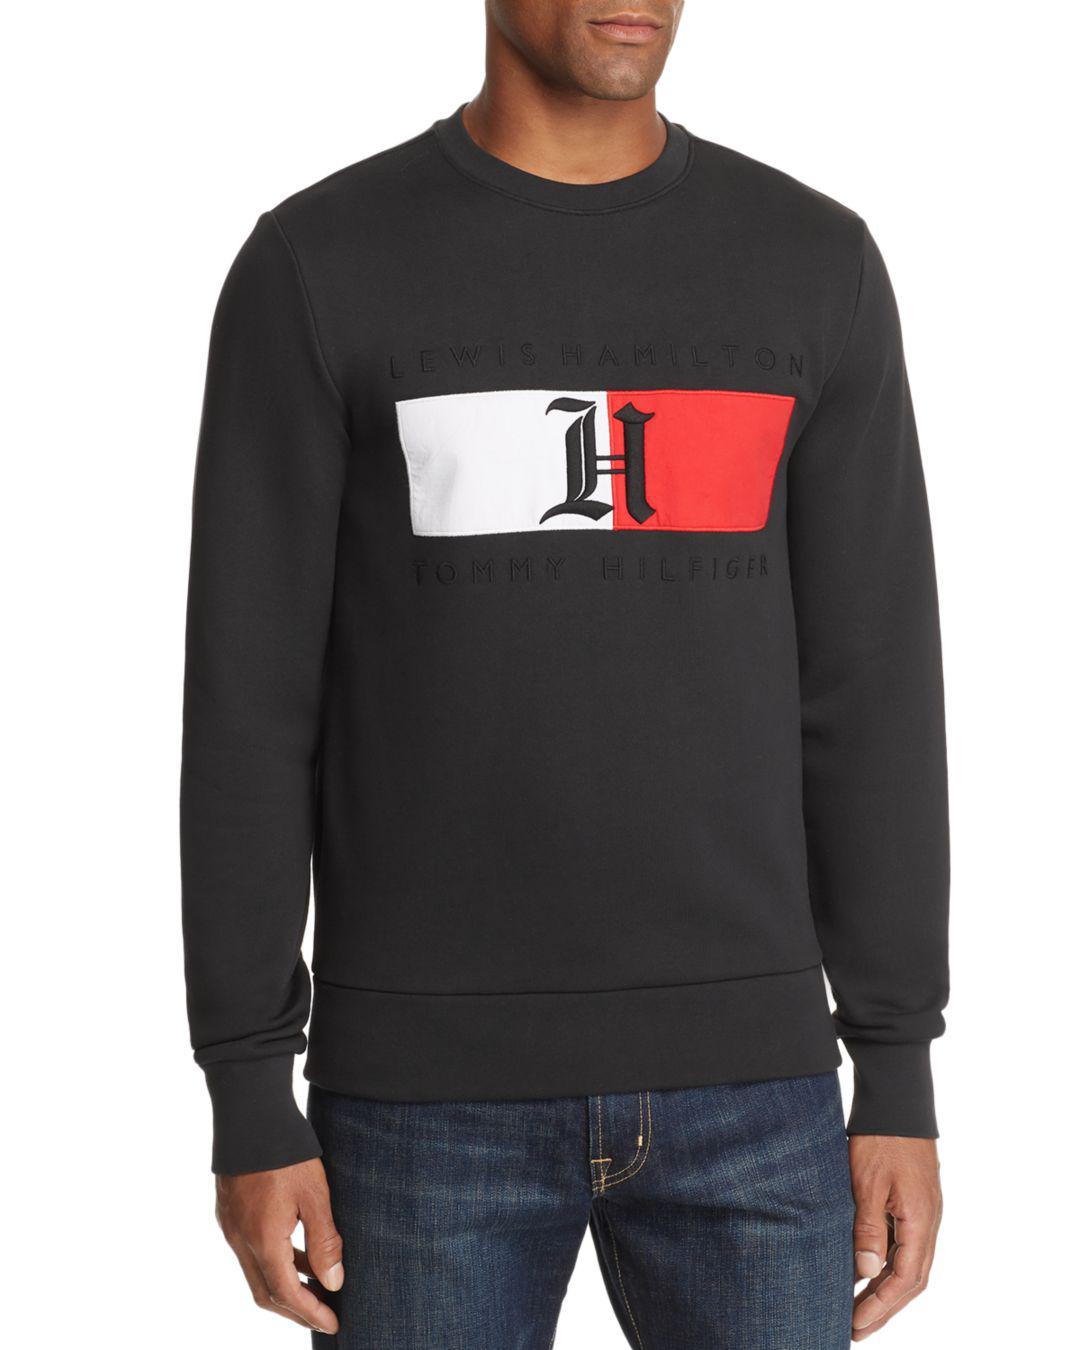 Tommy Hilfiger Cotton Lewis Hamilton Flag Sweatshirt in Black for Men - Lyst